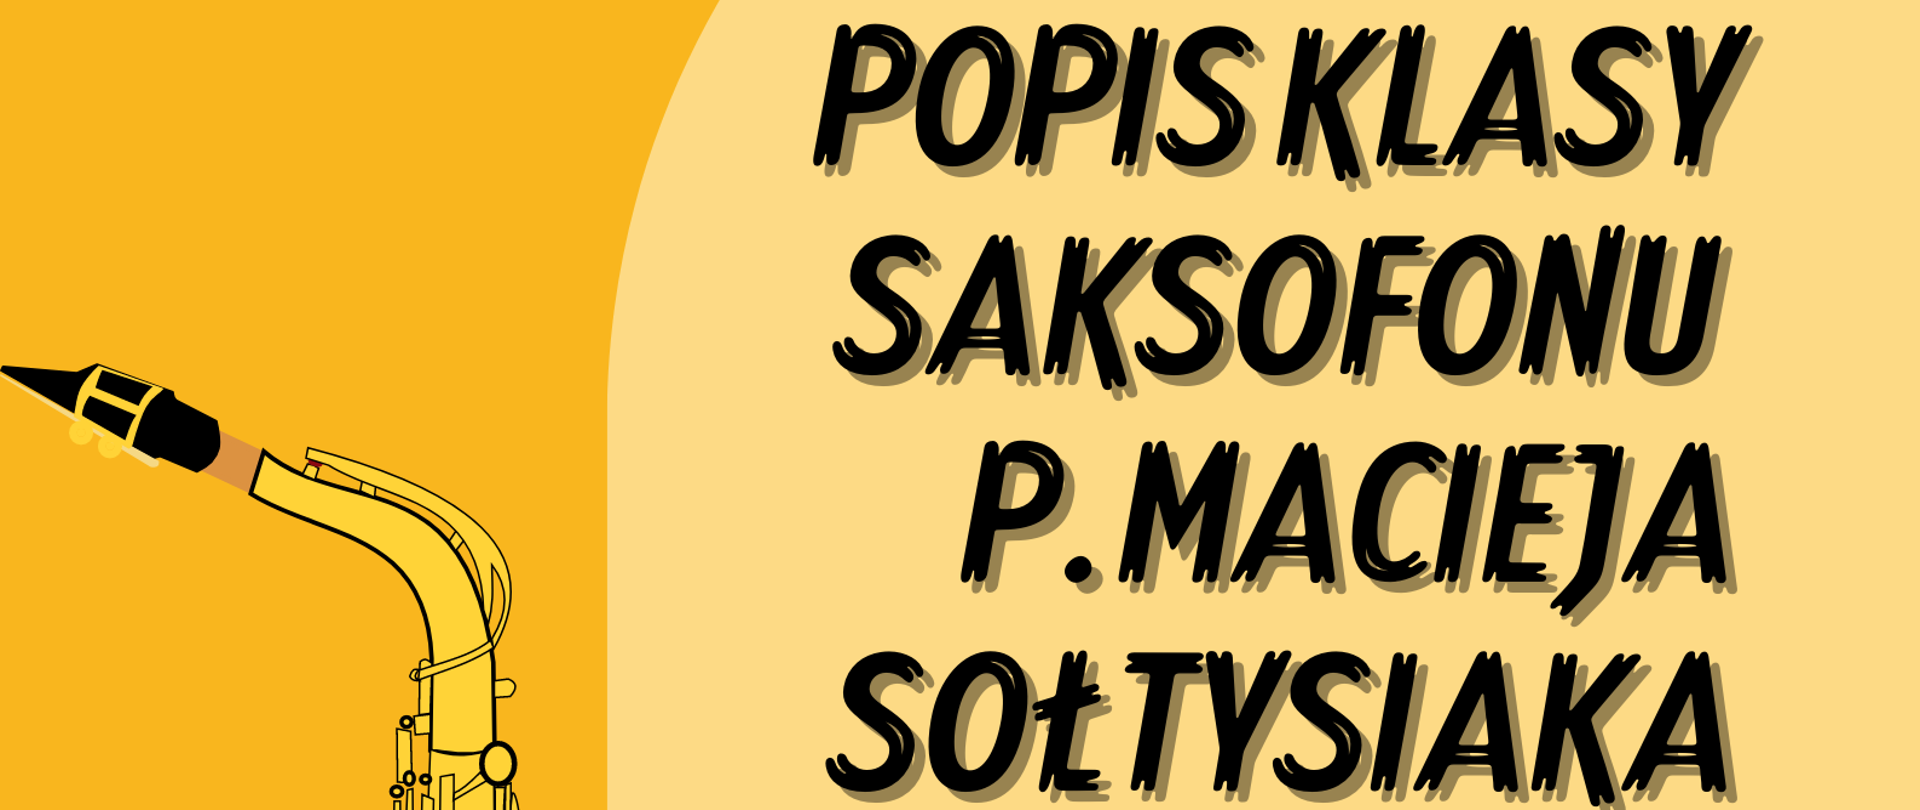 Popis klasy saksofonu p. Macieja Sołtysiaka 